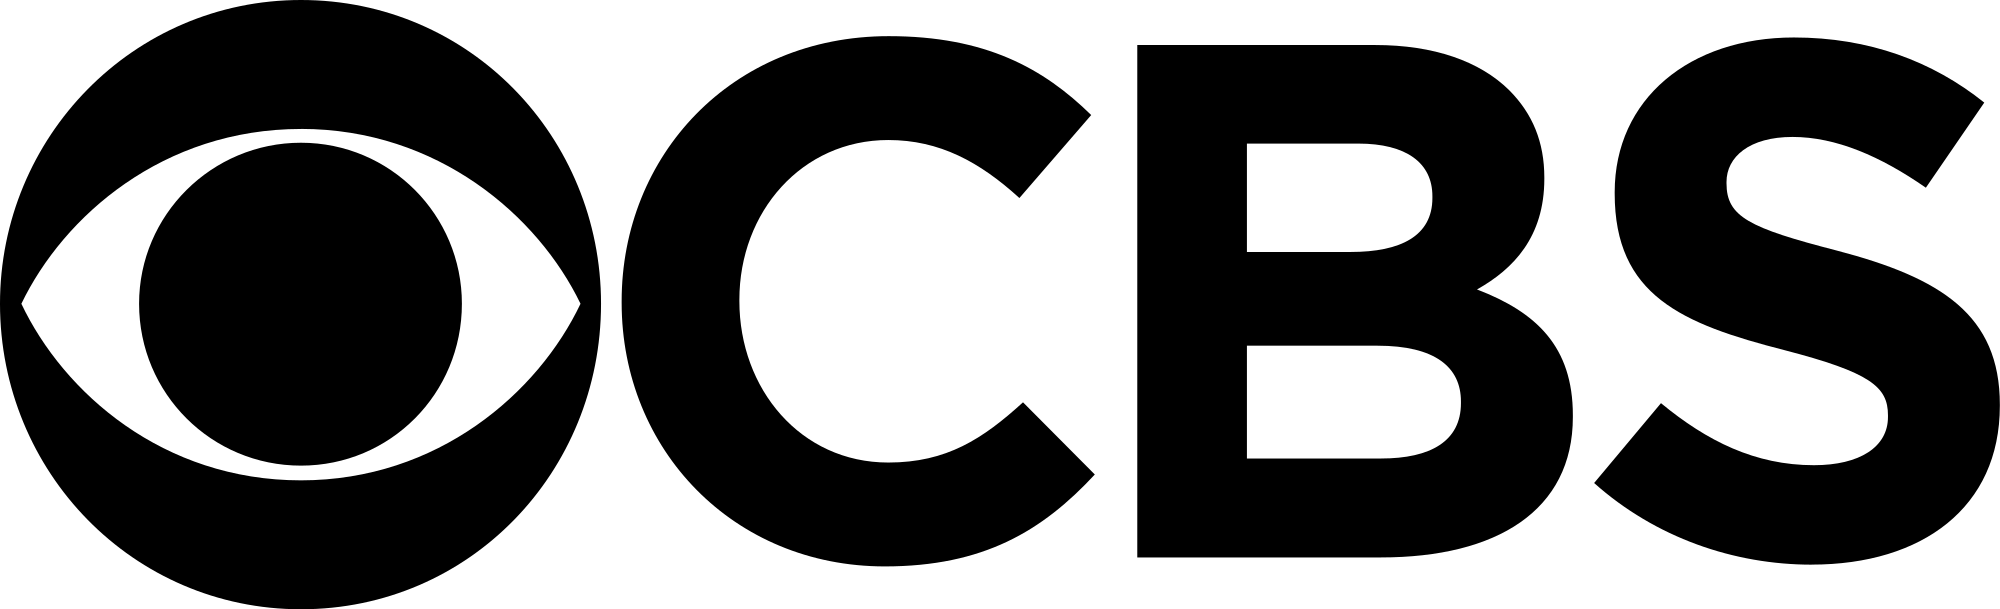 2000px-CBS_logo.png